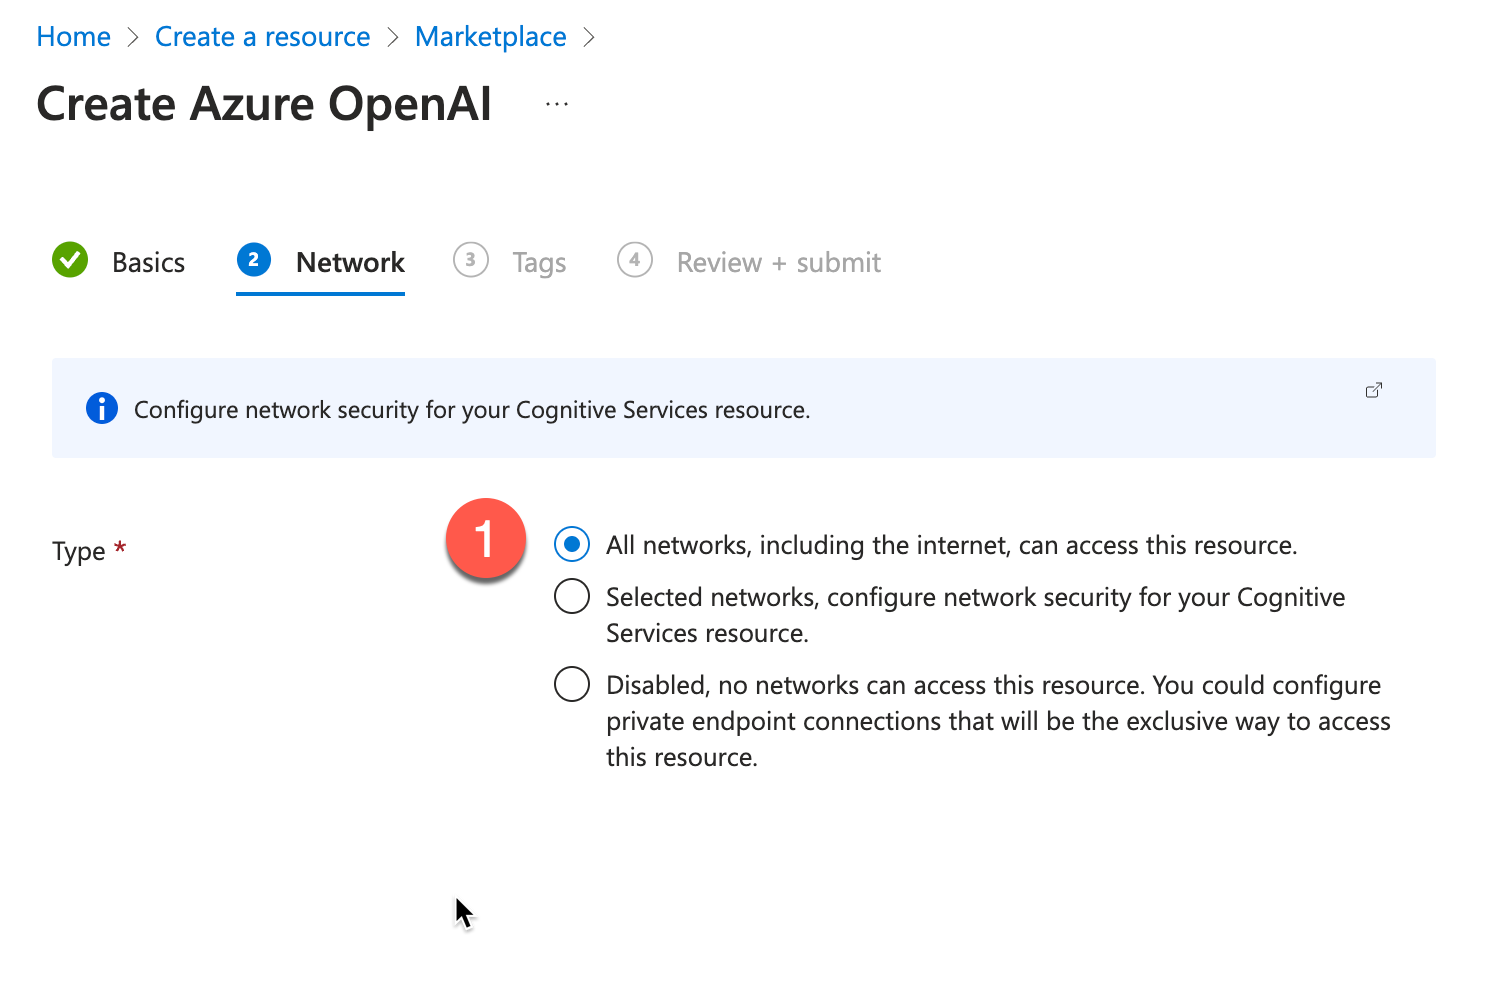 Create Azure OpenAI in Network setting